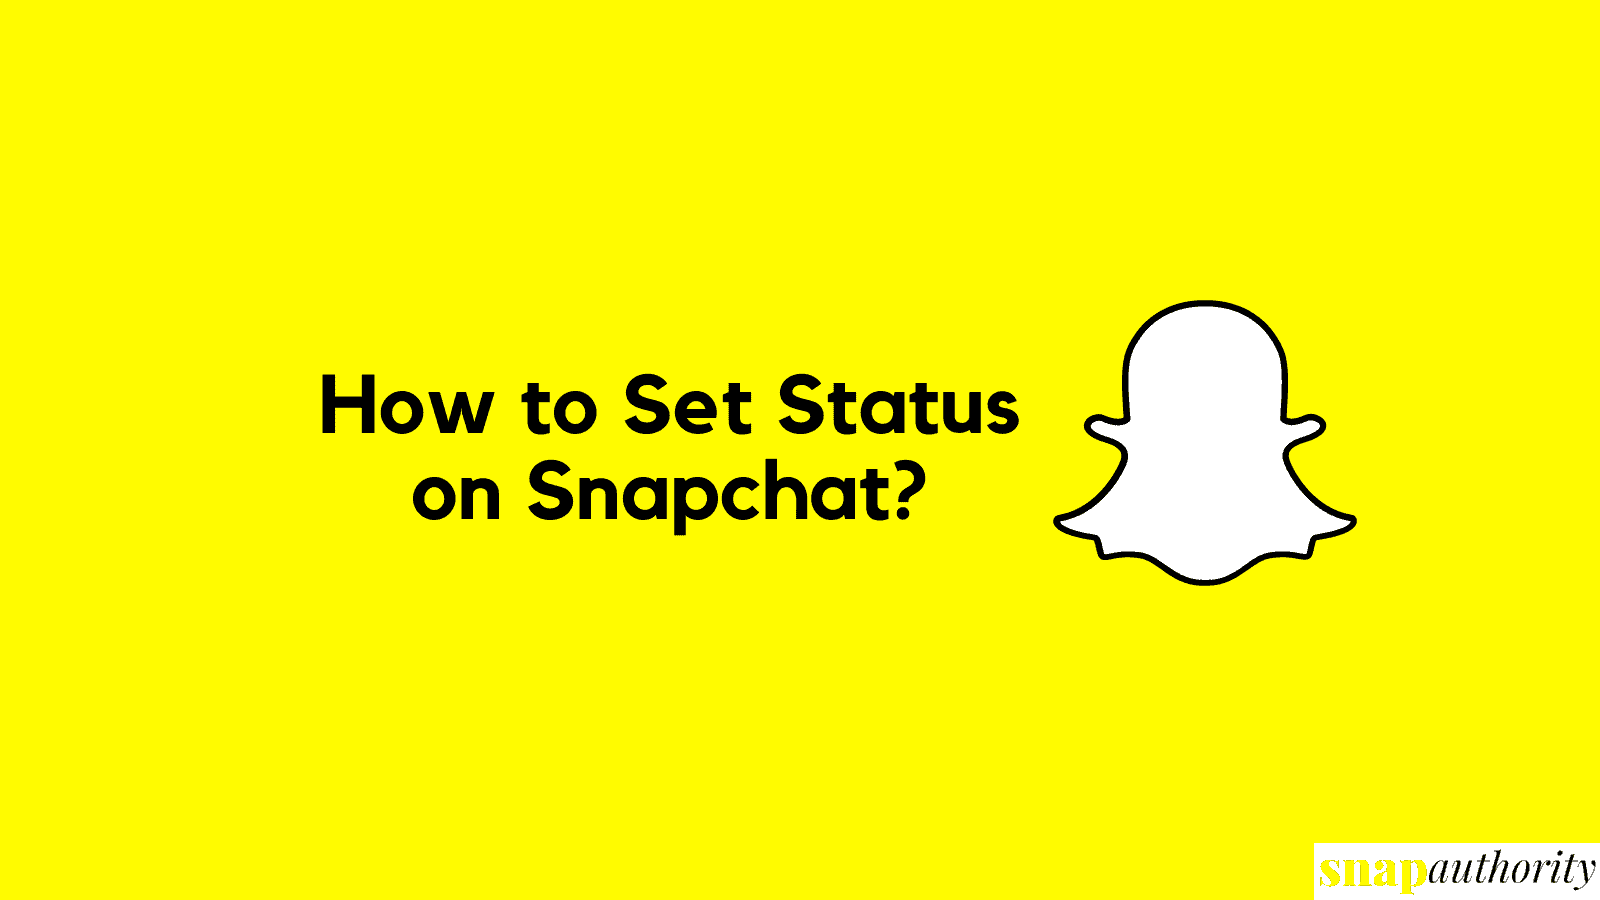 set status on Snapchat